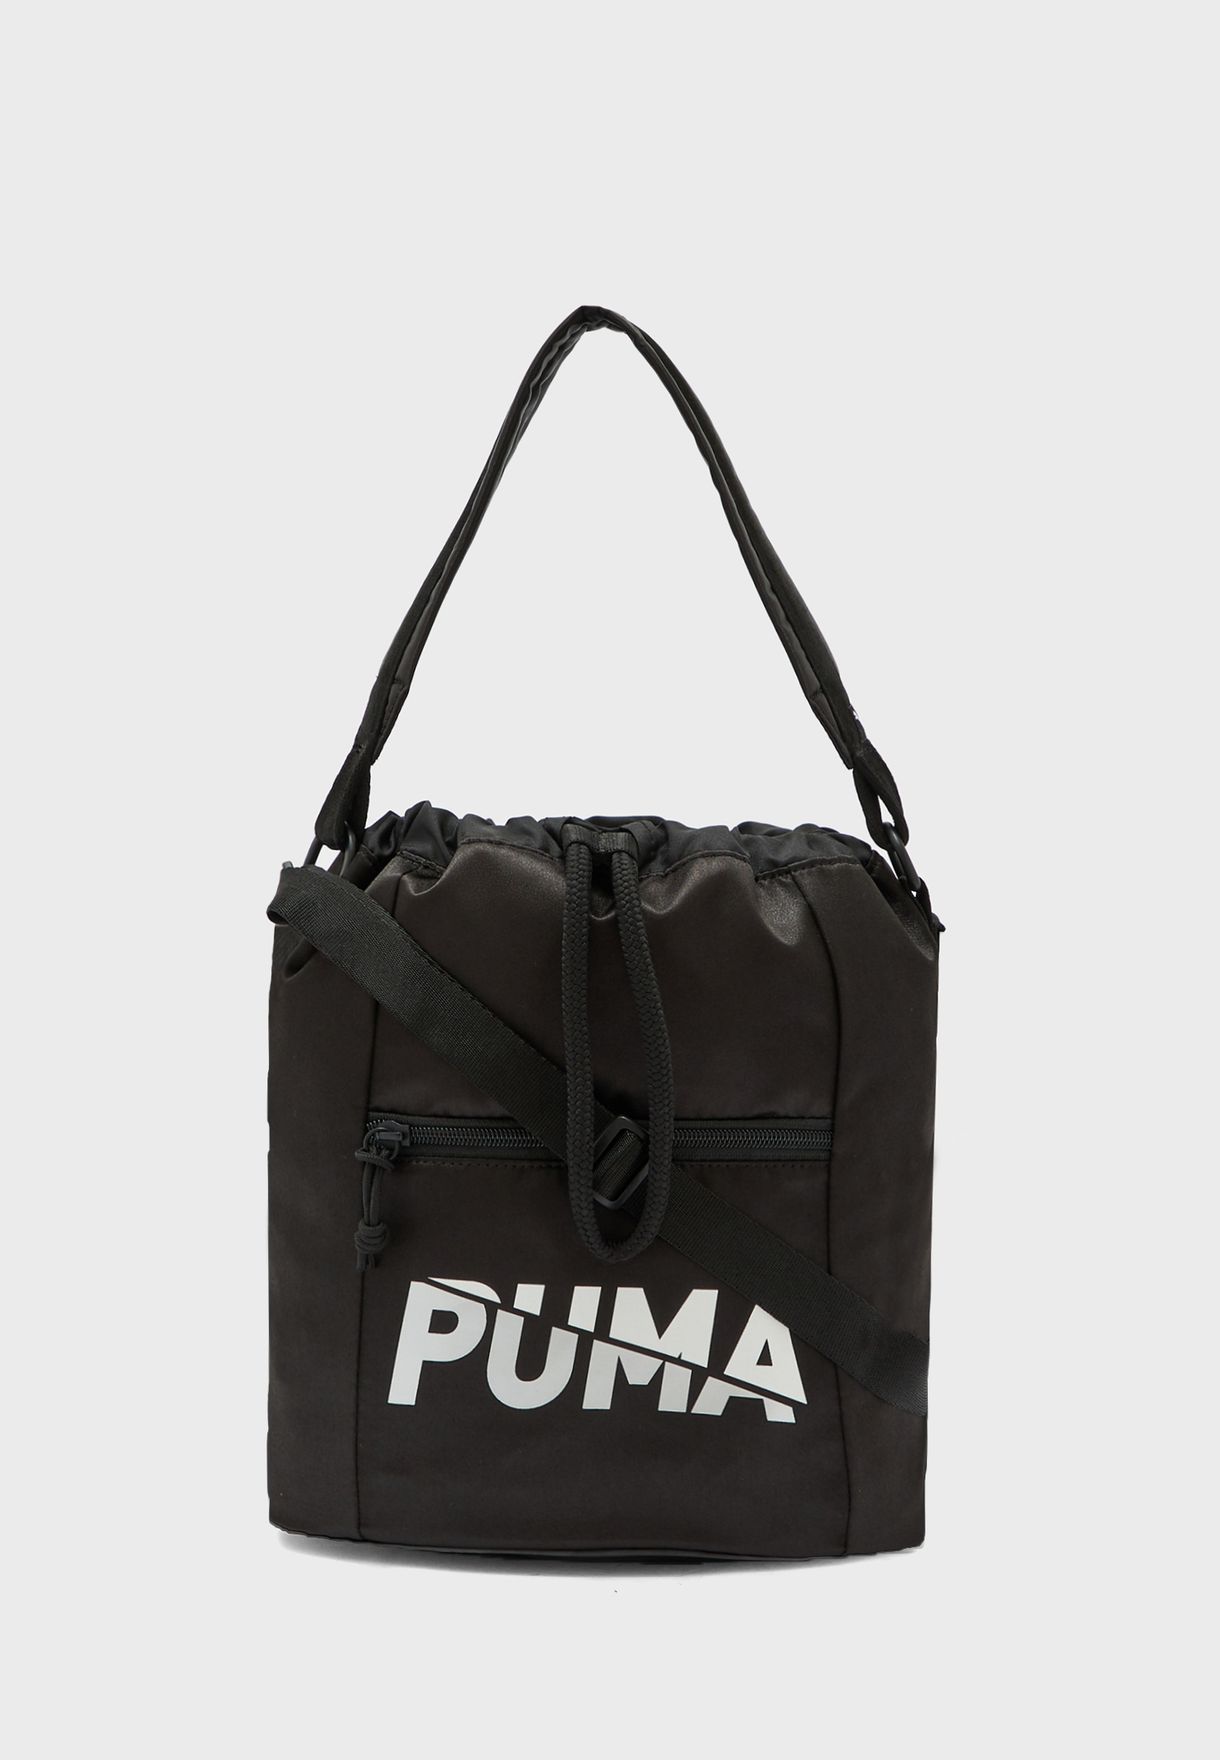 puma bags under 300